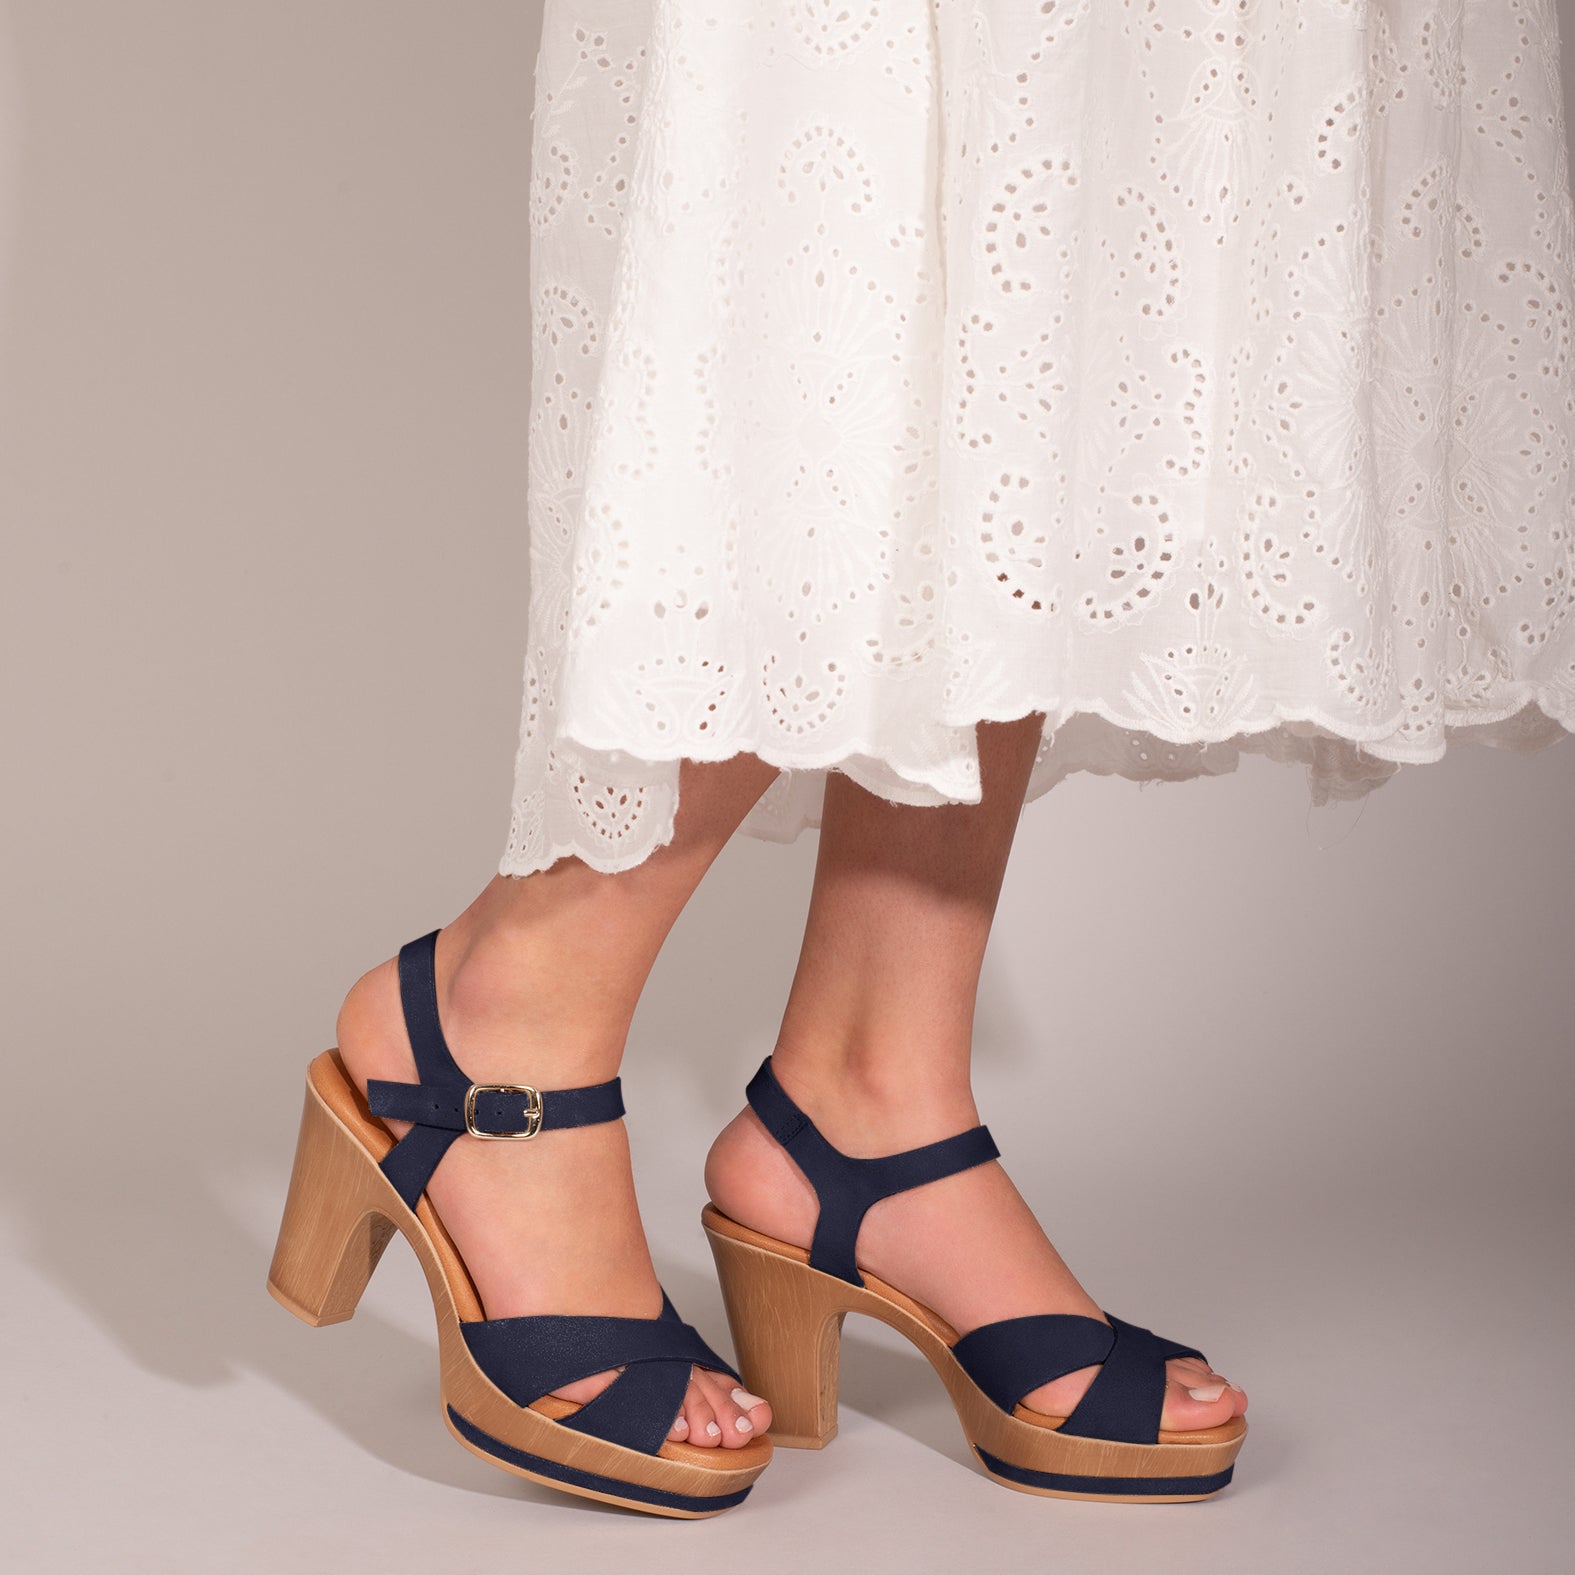 MYKONOS – NAVY high heel sandals with platform